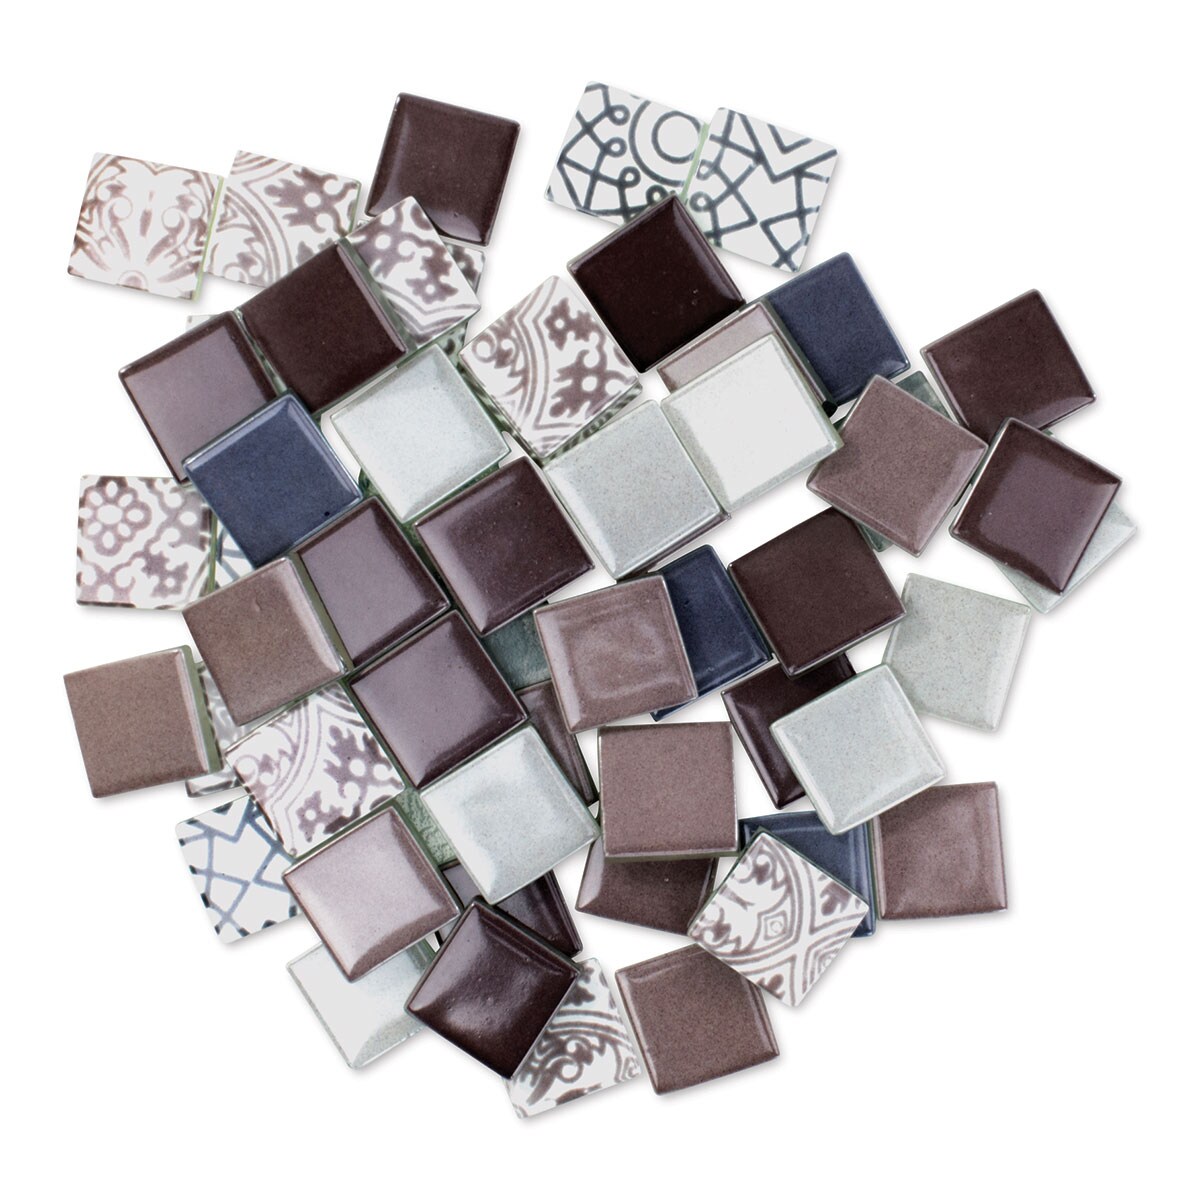 Mosaic Mercantile Patchwork Tiles - Heather Purple/Grey, 3 lb